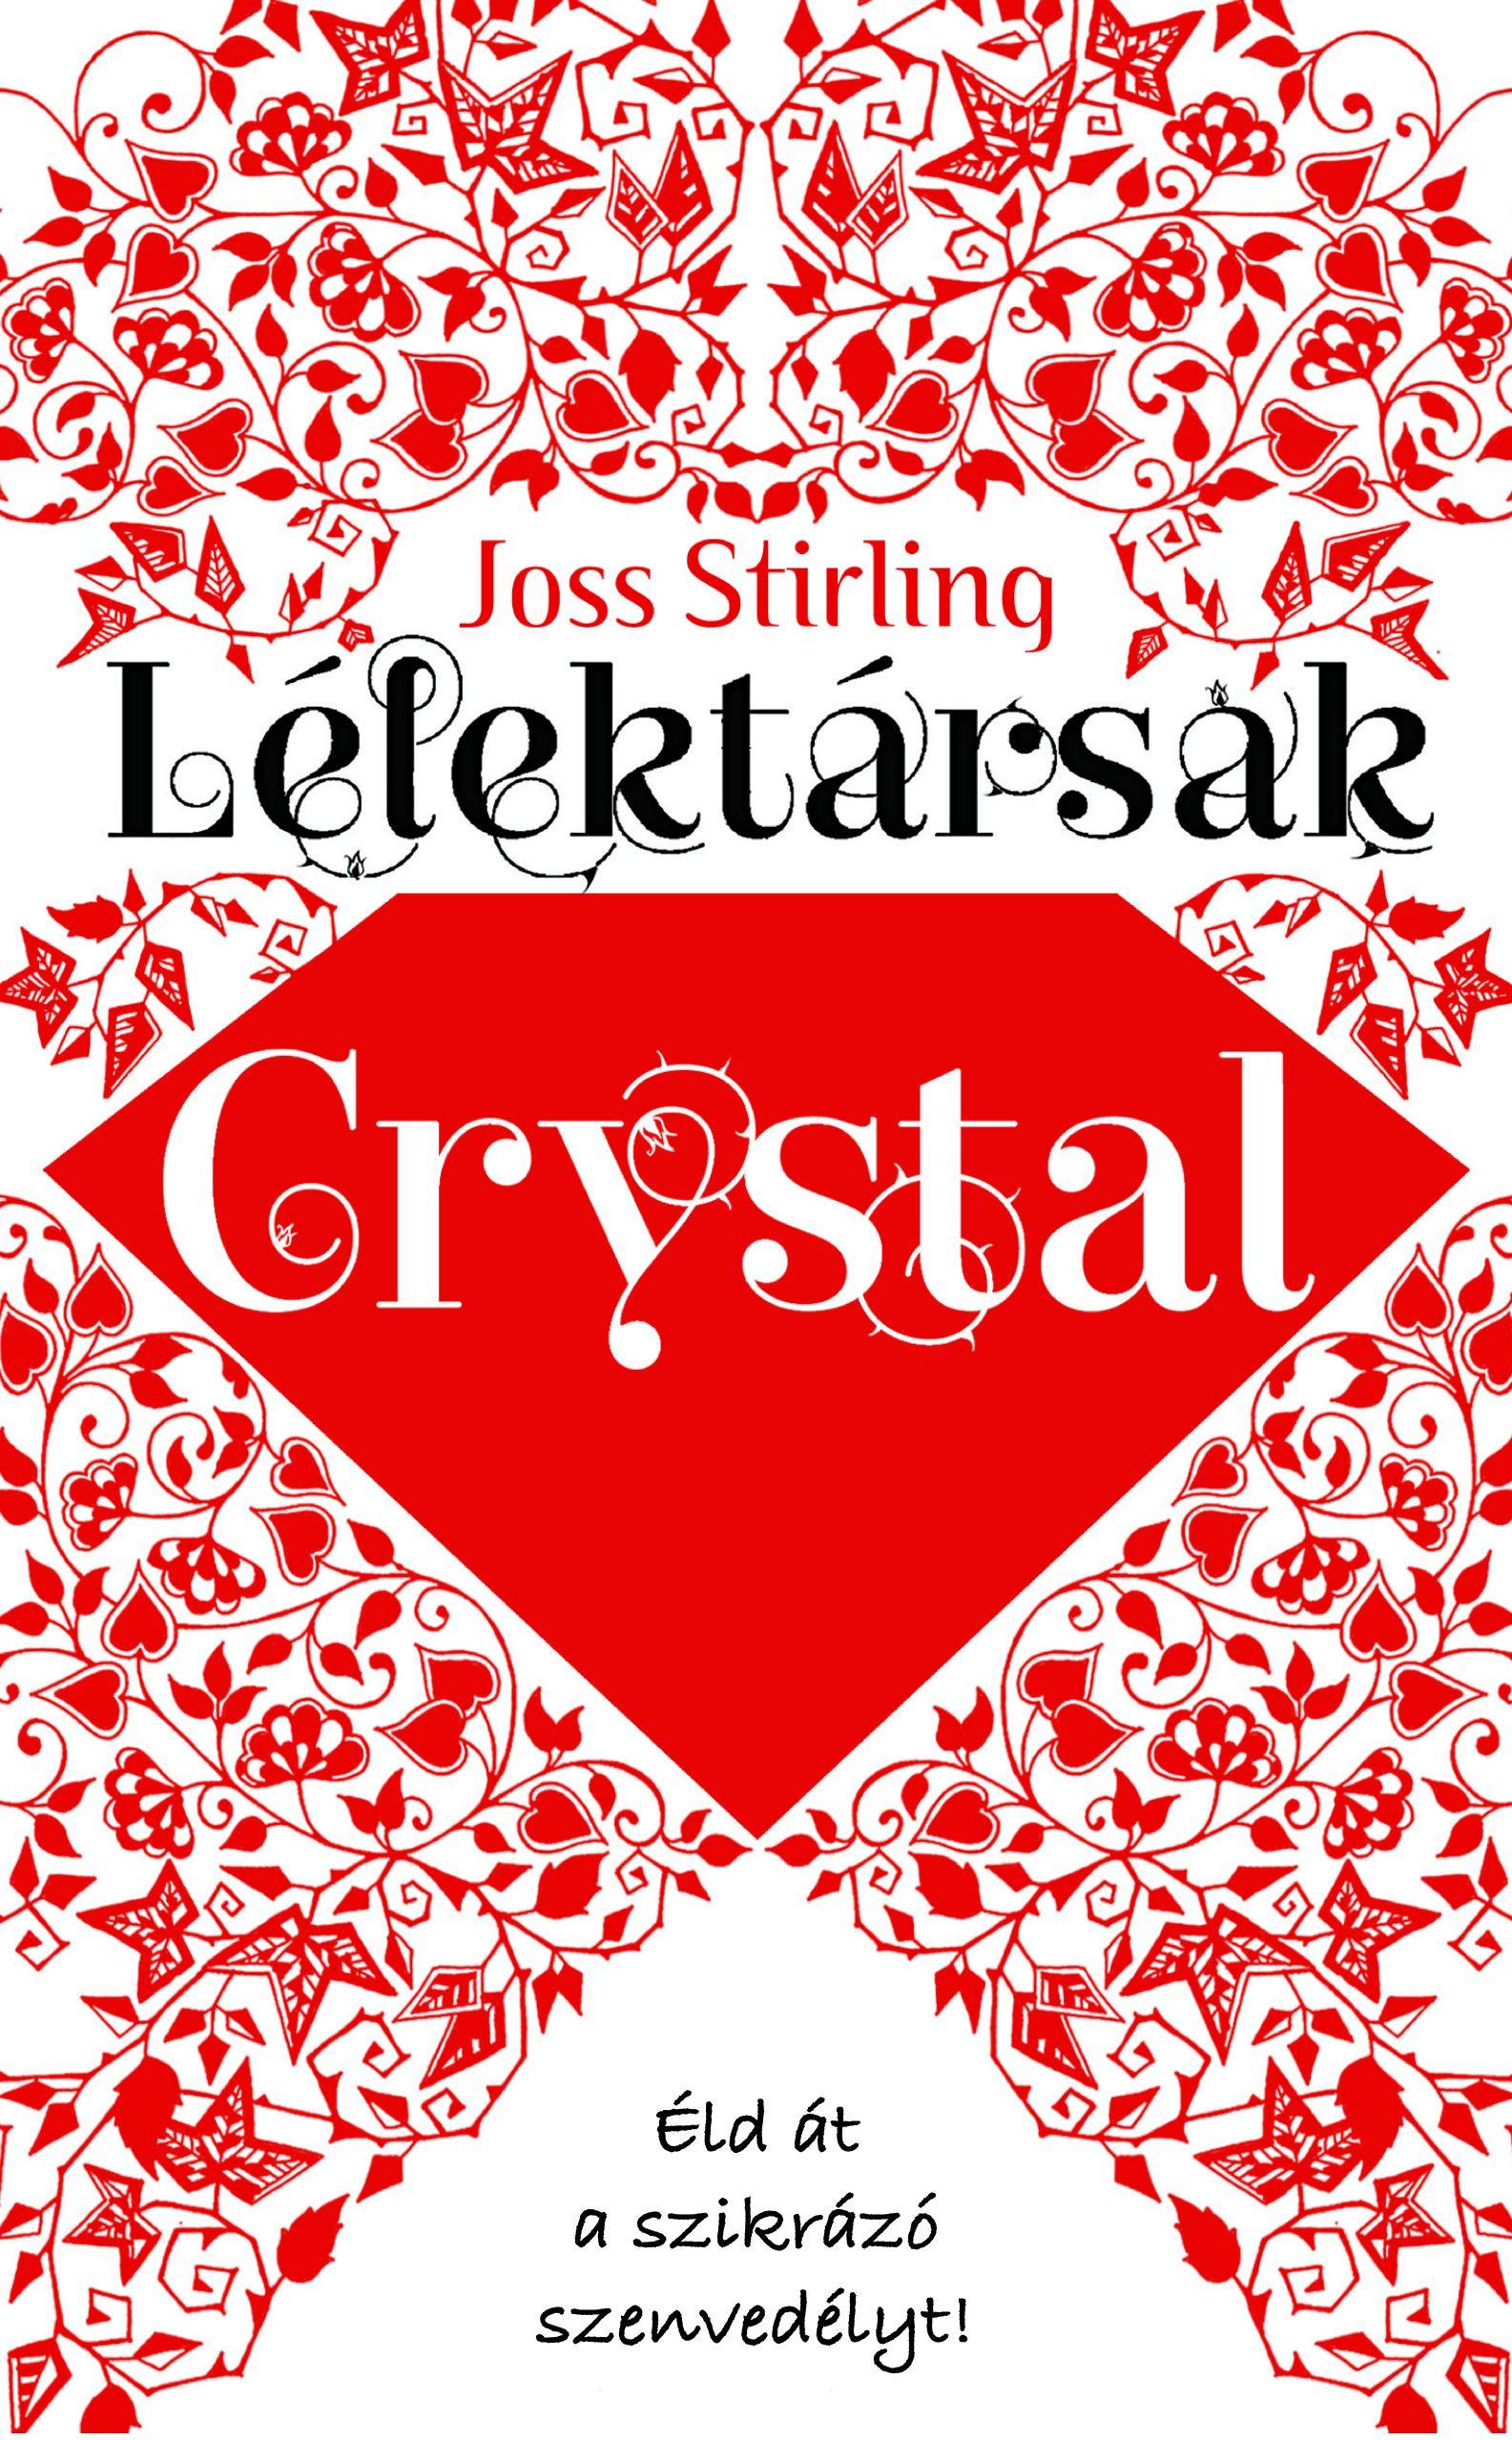 Joss Stirling - Lélektársak - Crystal